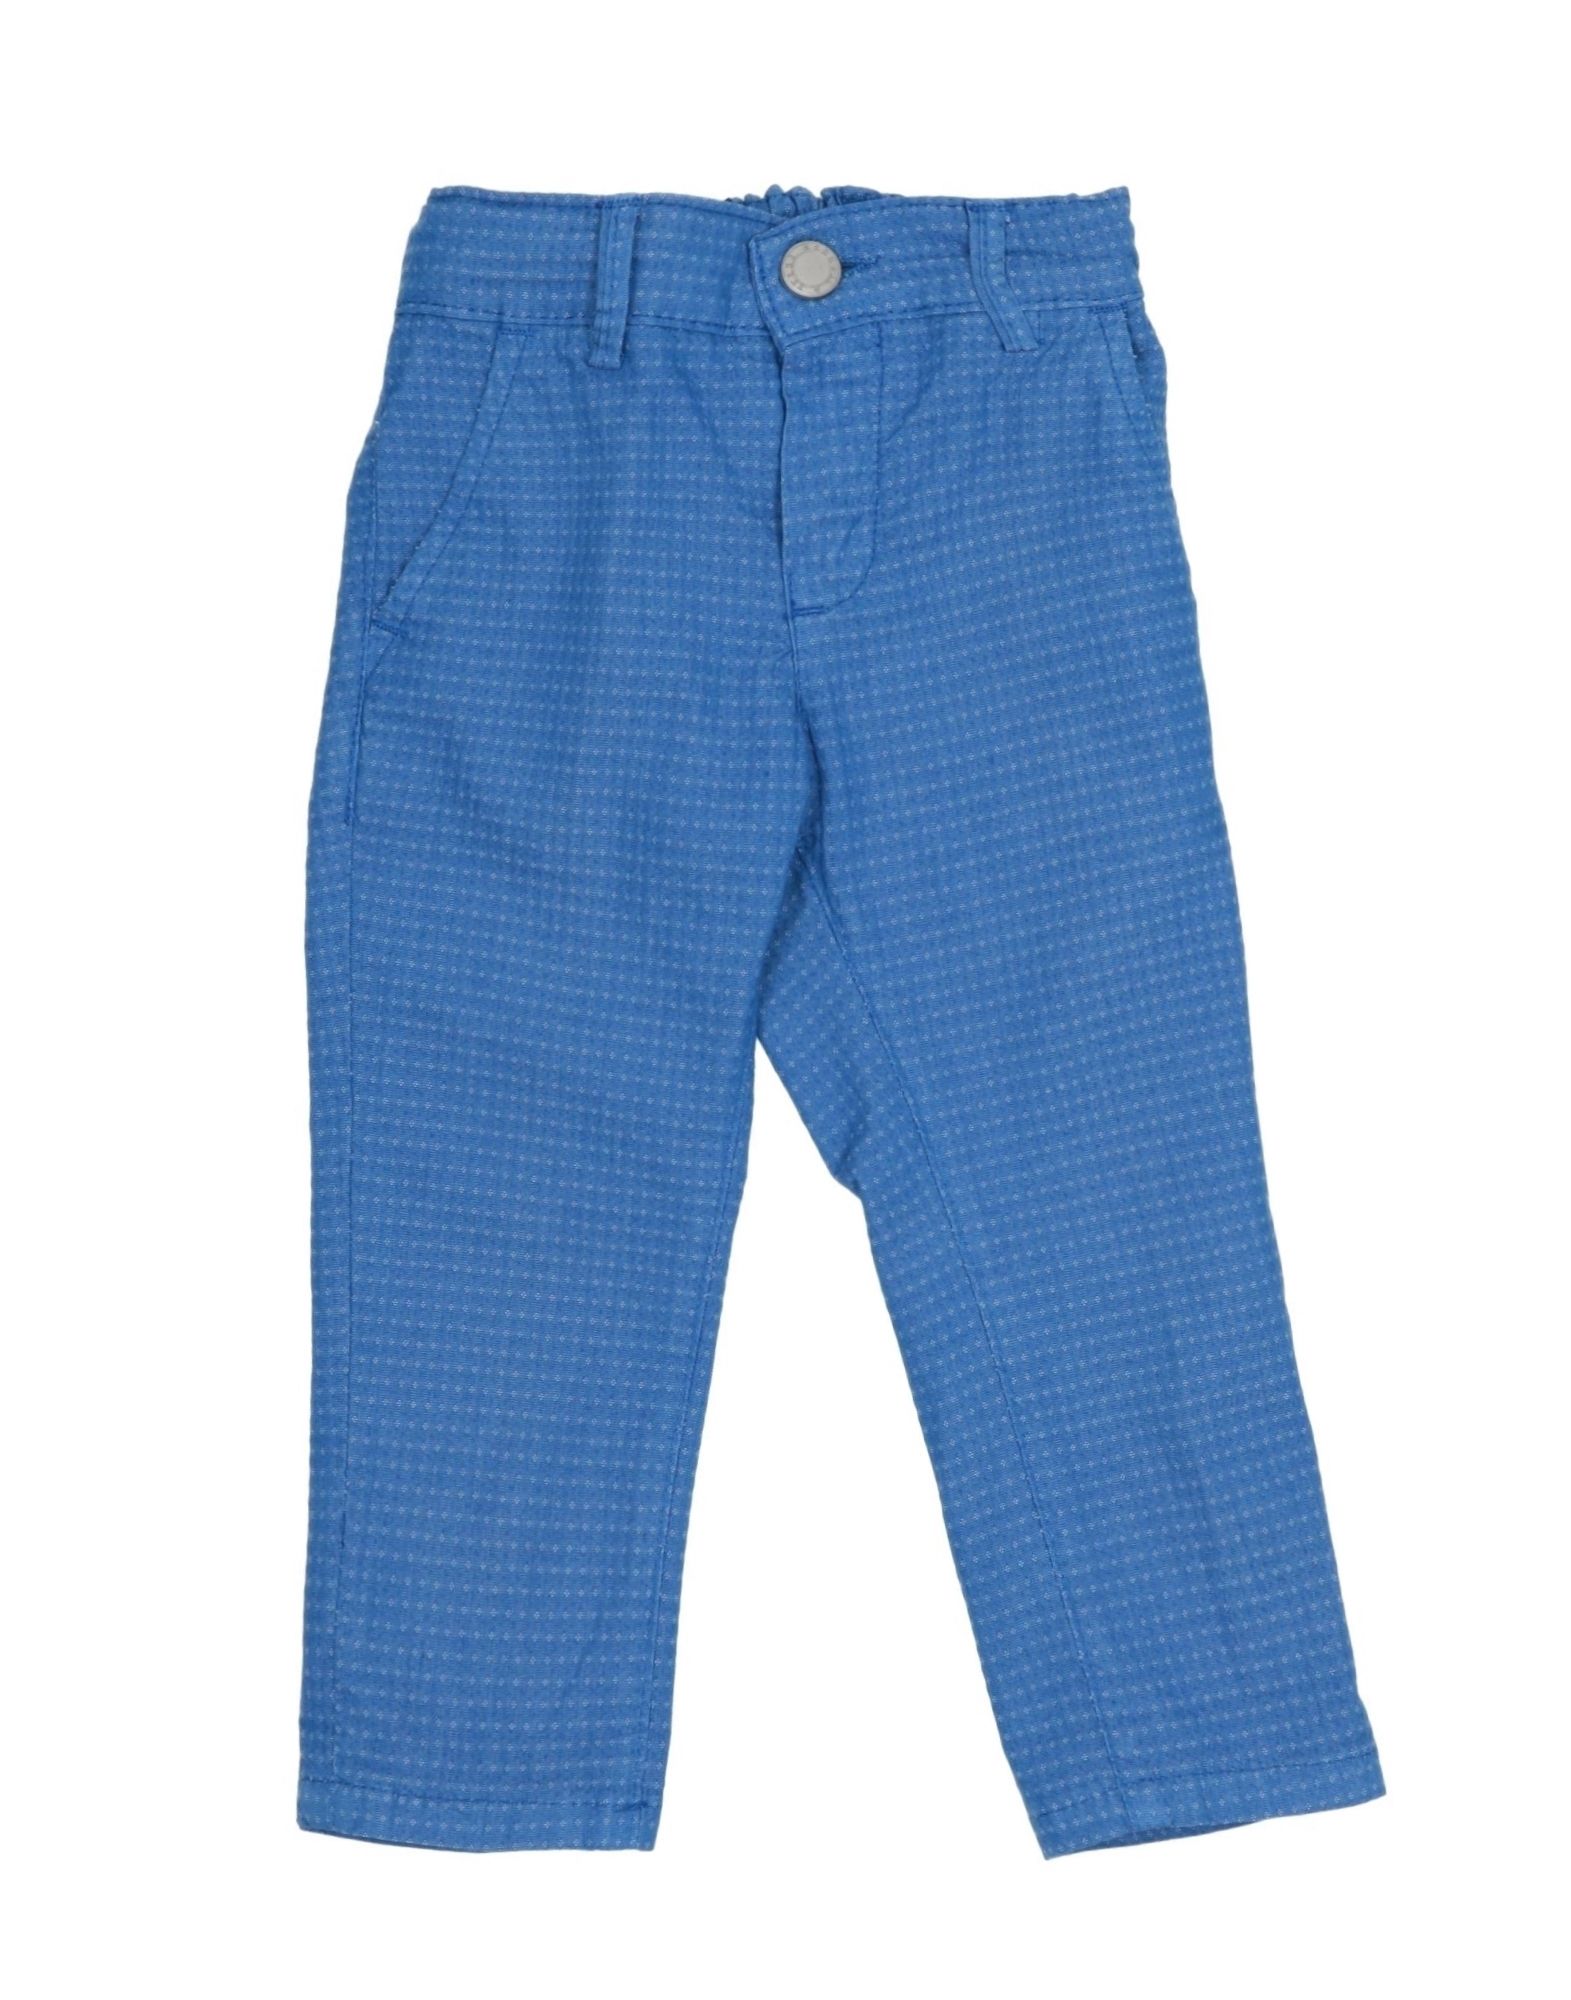 Manuell & Frank Kids' Pants In Blue